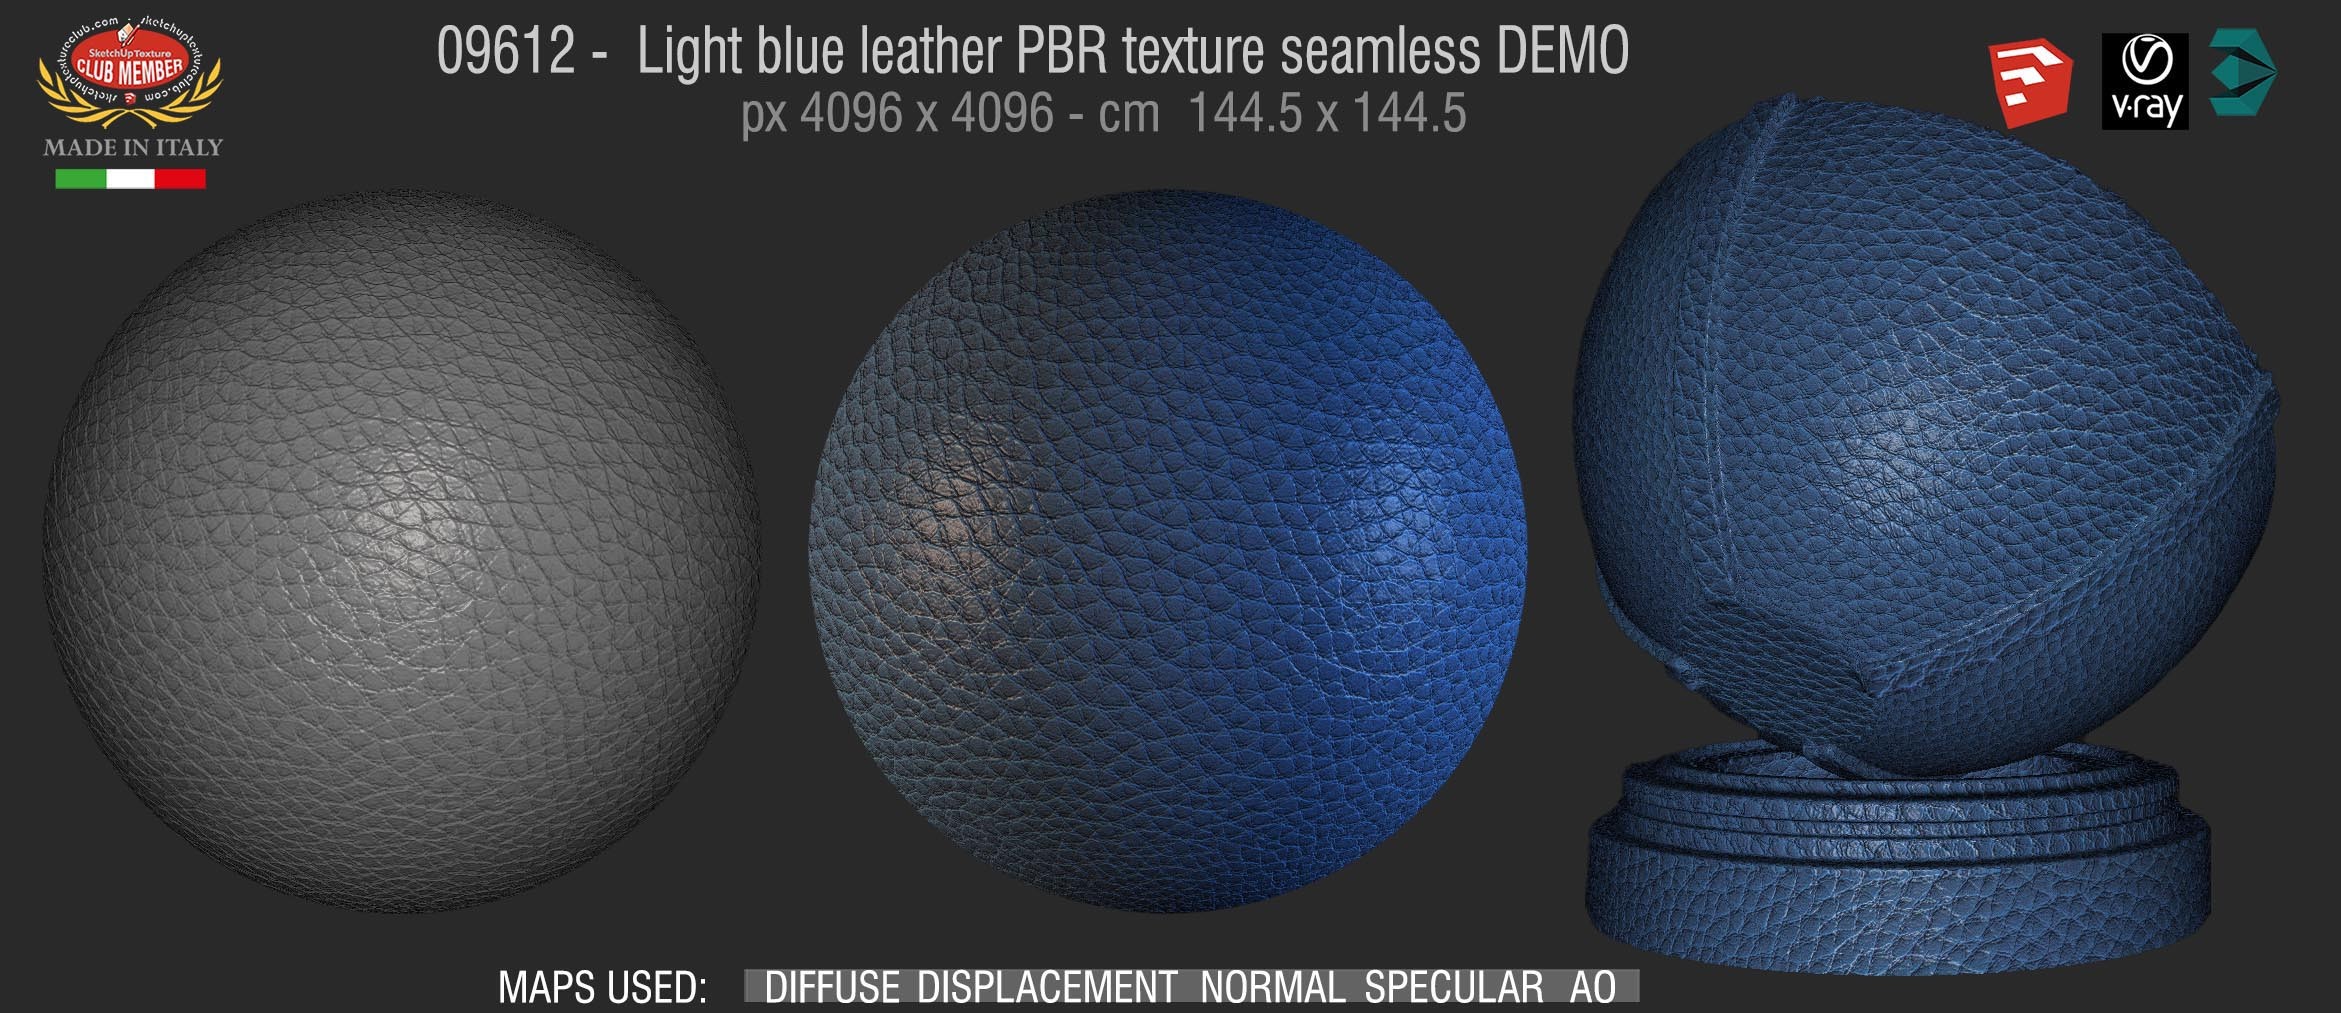 09612 light blue leather PBR texture seamless DEMO